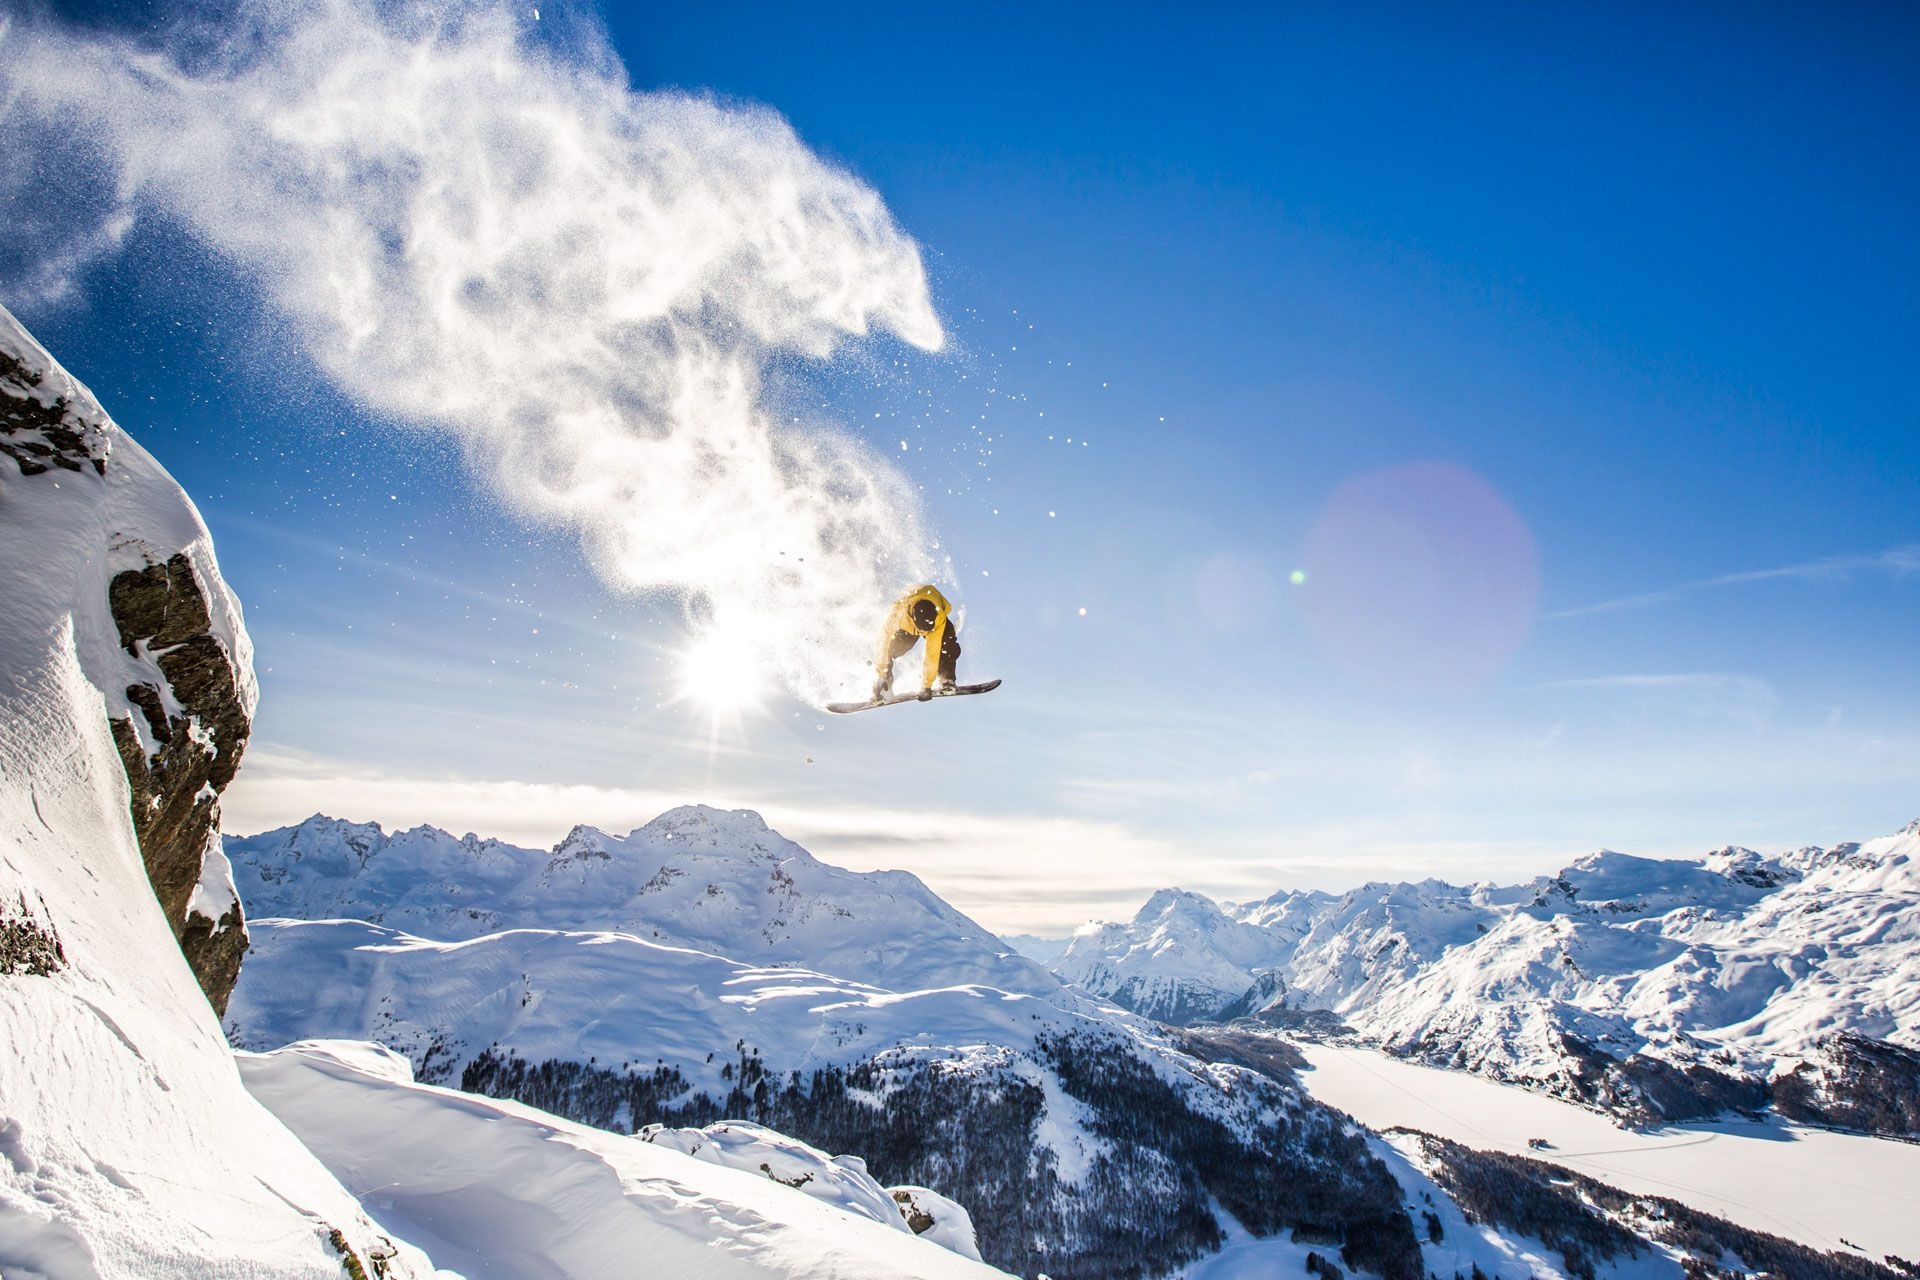 Snowboarding: Travis Rice, John Jackson, Pat Moore, Red Bull Aerial Tricks and Big Air performance. 1920x1280 HD Wallpaper.